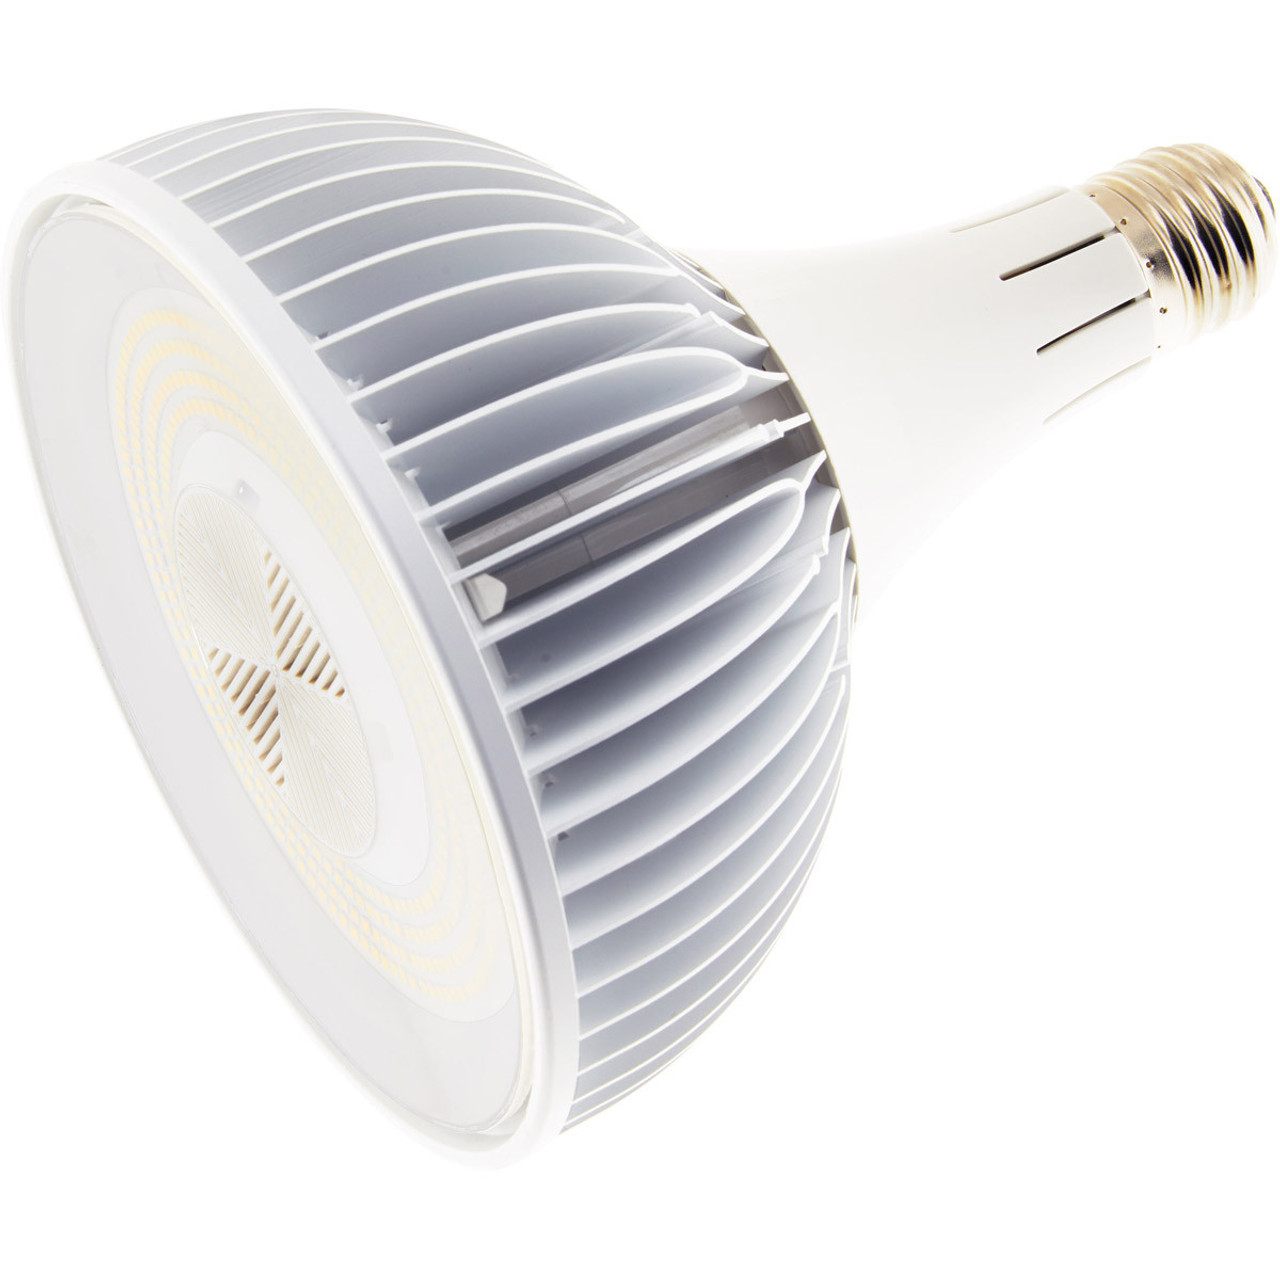 1000W Hghbay Retrofit LED Bulb - 150 Watt 25,000 Lumens - 4000K White - Replaces 1000W Metal Halide Bulb - Ballast Bypass